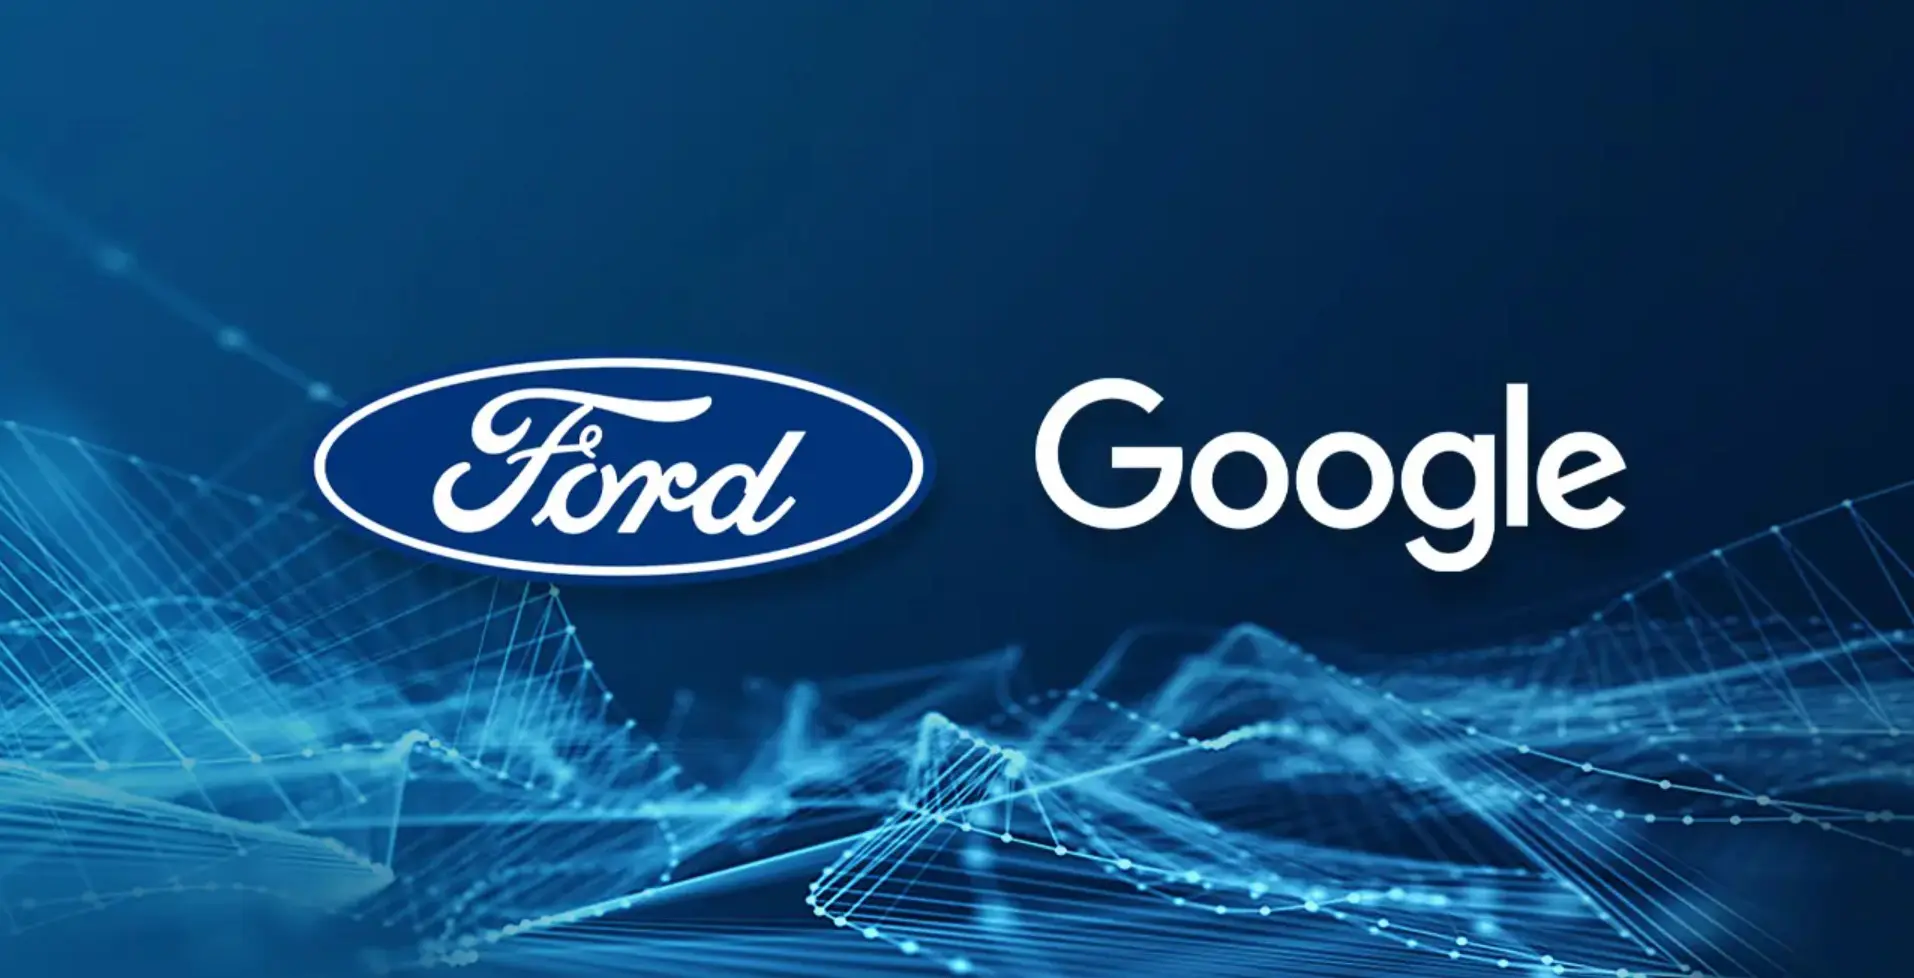 Ford Google